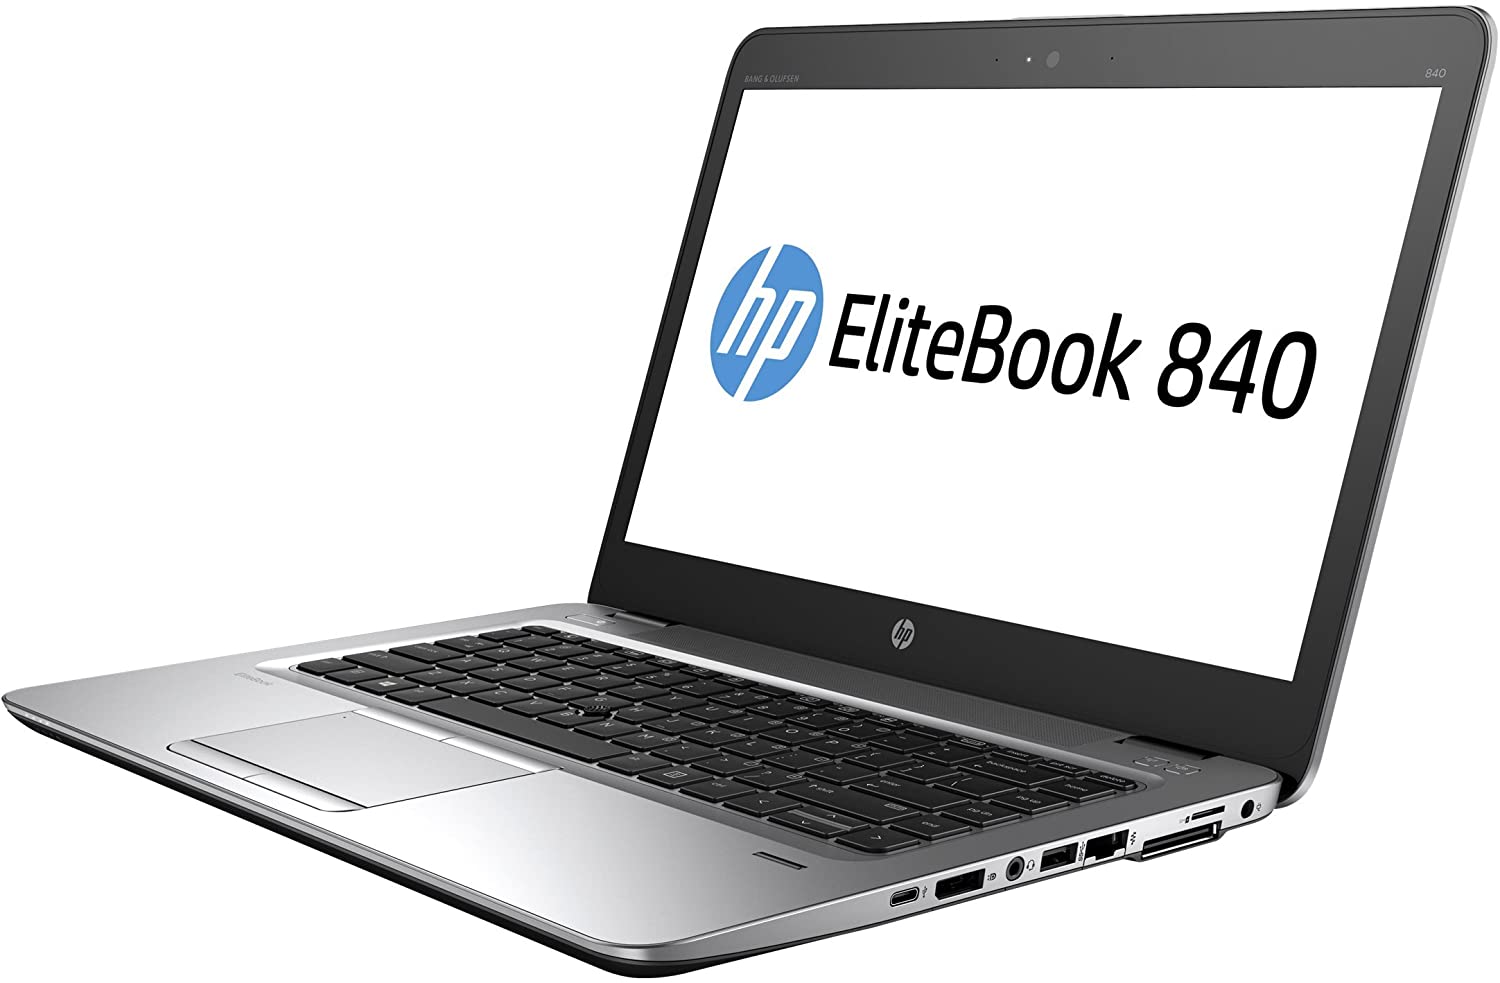 Portátil HP Elitebook 840 G3 GRADO A (Intel Core i7 6600U 2.6Ghz/8GB/256SSD-M.2/14HD/NO-DVD/W10P) Preinstalado